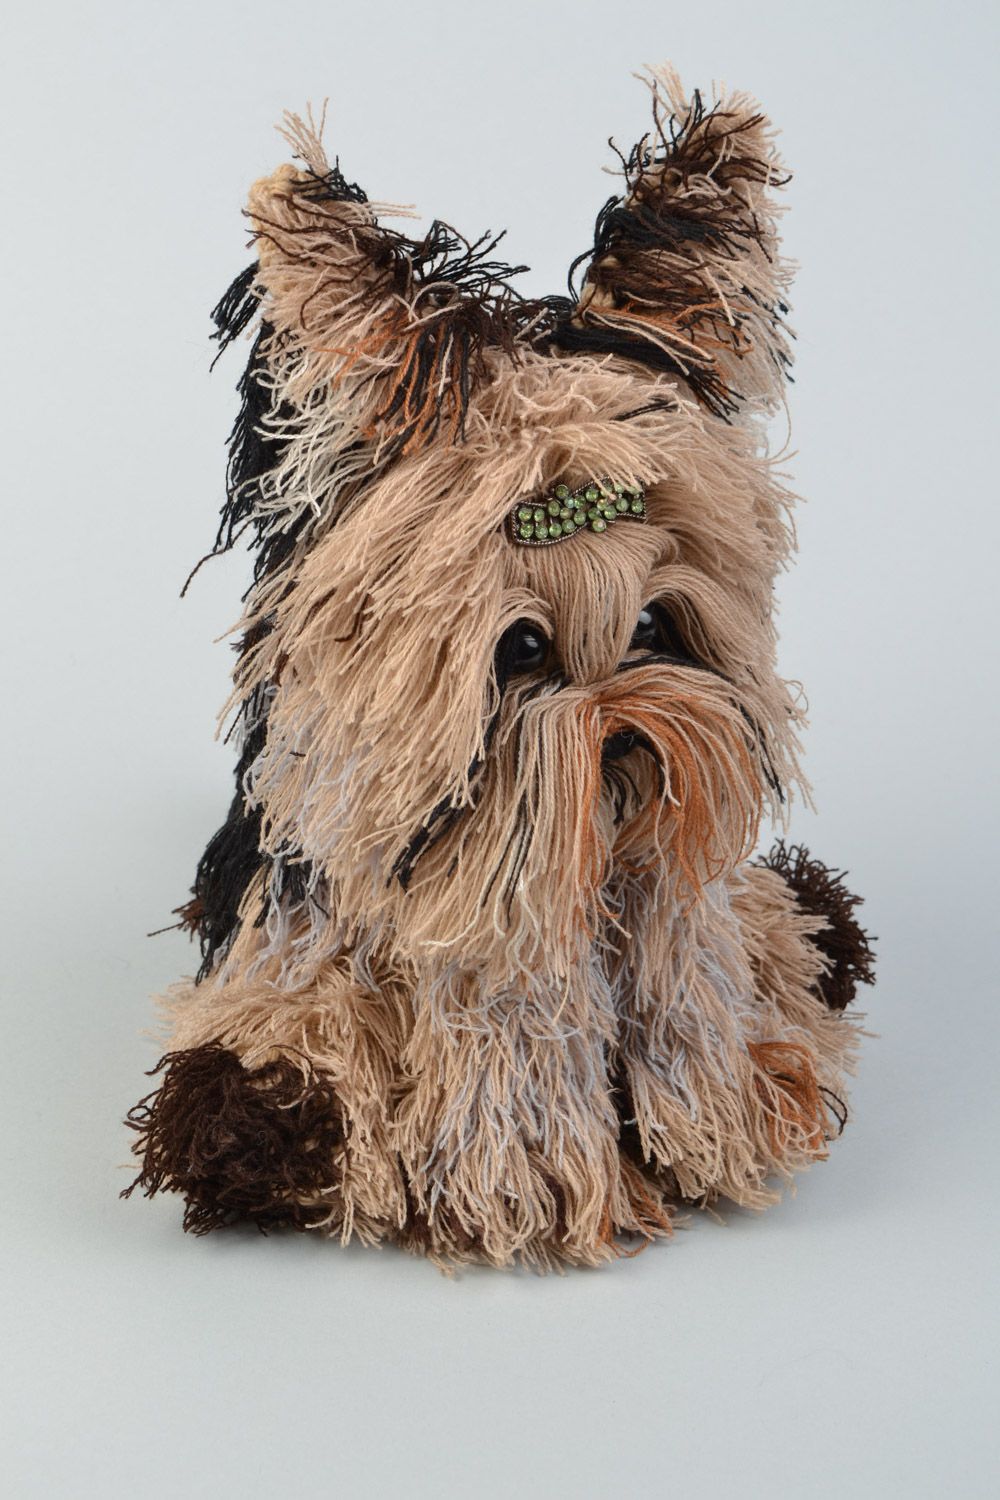 Handmade Dog Yorkshire Terrier Custom Personalized Stuffed Dog